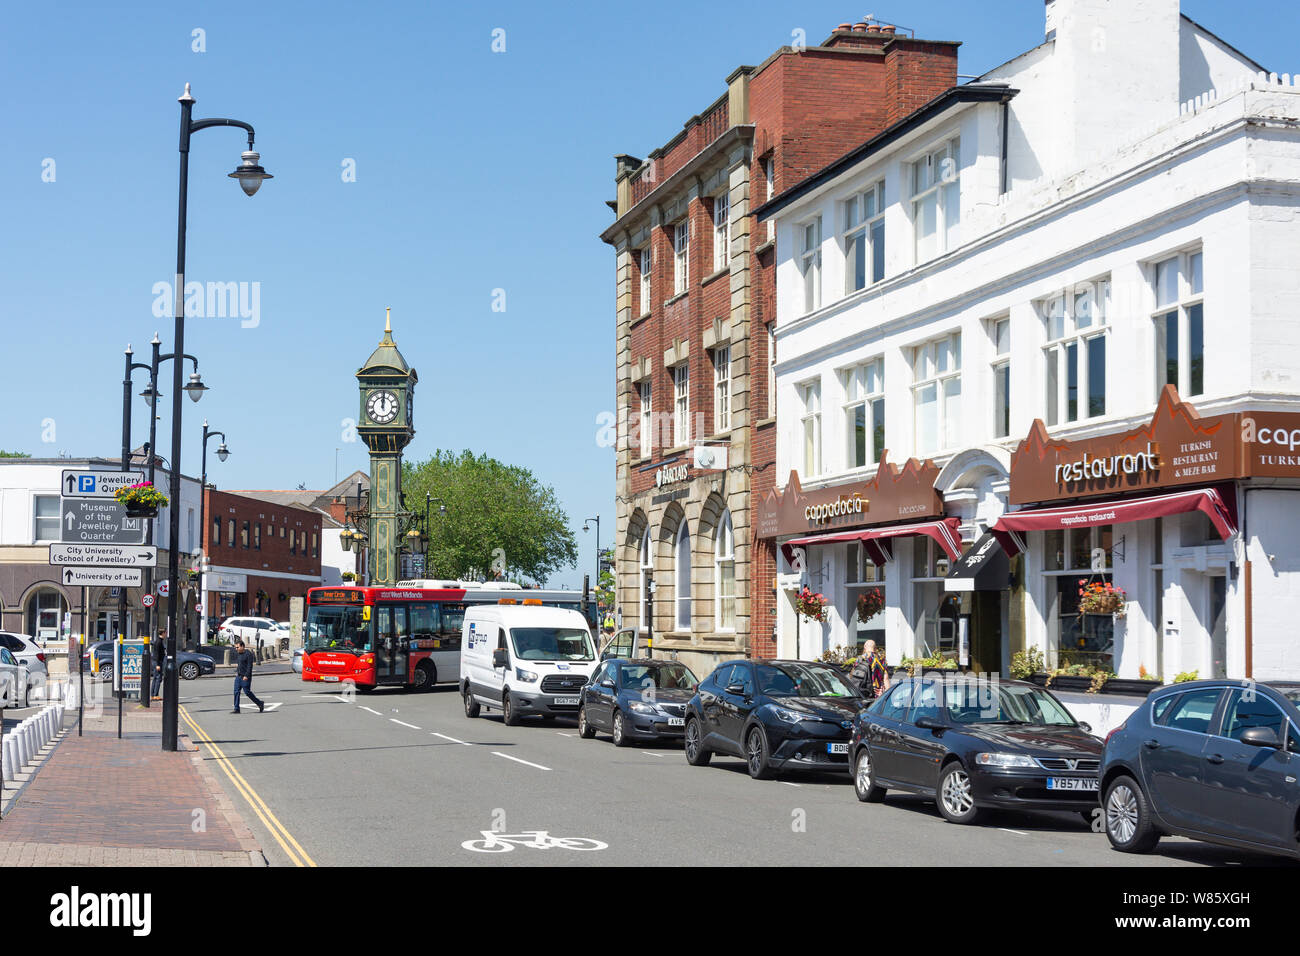 Chamberlain Clock, Frederick Street, Jewellery Quarter, Birmingham, West Midlands, England, United Kingdom Stock Photo